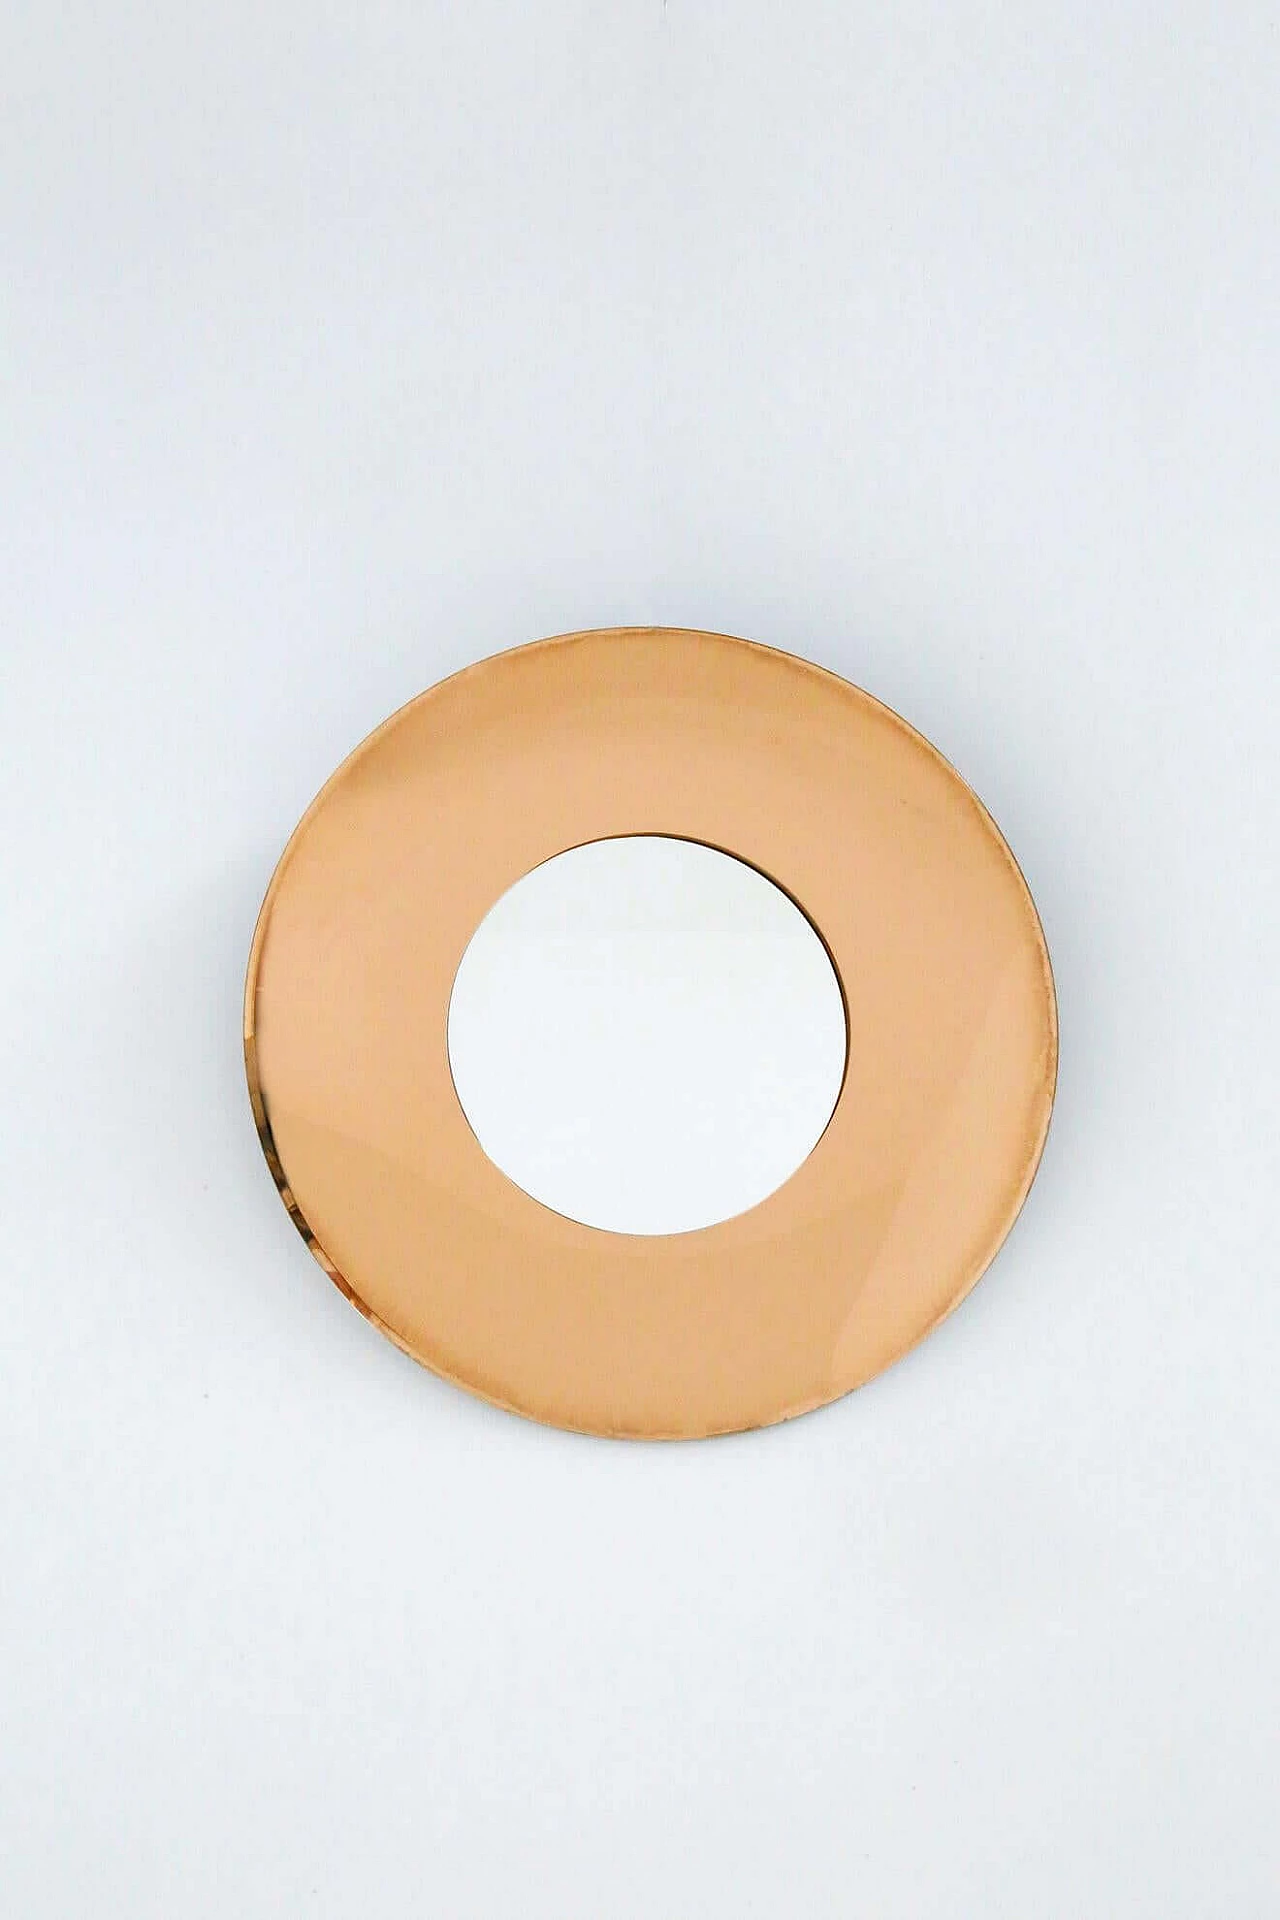 Round orange mirror in FontanaArte style by Effetto Vetro, 2000s 1387883